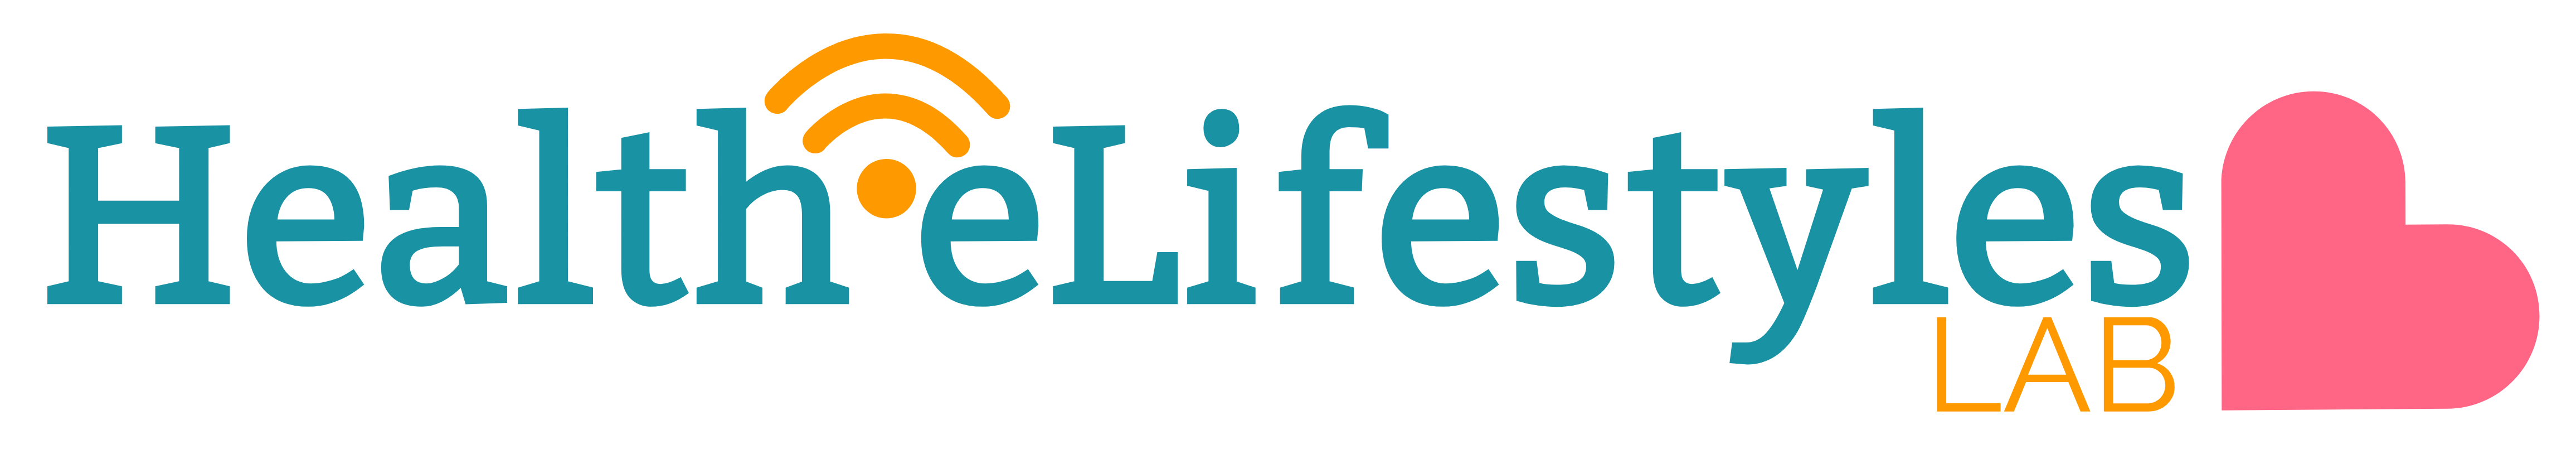 Health eLifestyles Lab logo